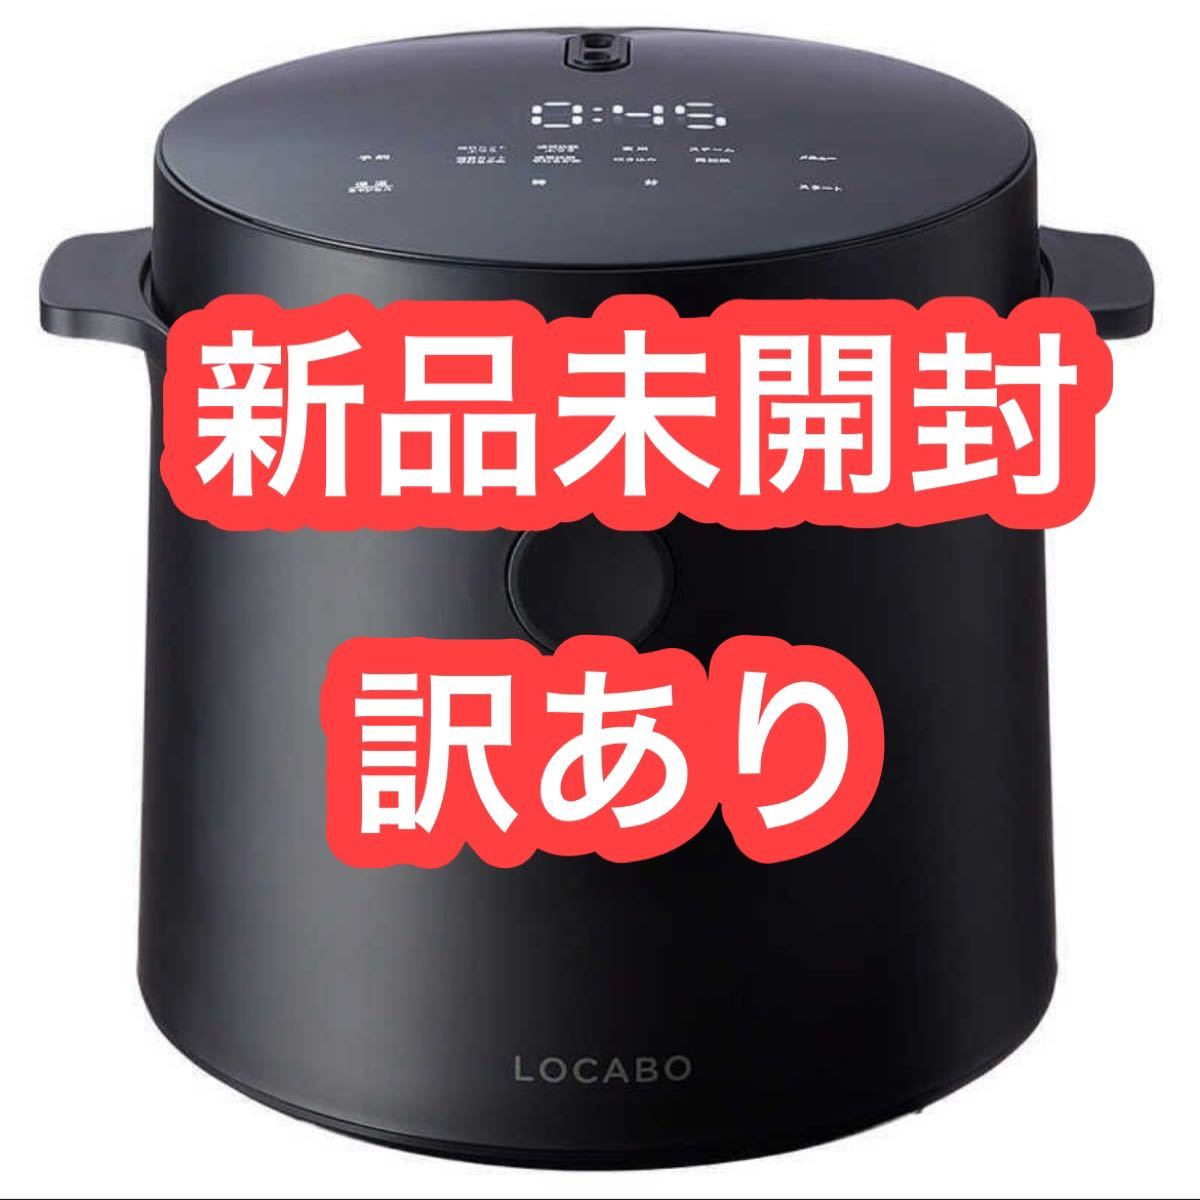 LOCABO 糖質カット炊飯器 JM-C20E-B 【一部予約販売】